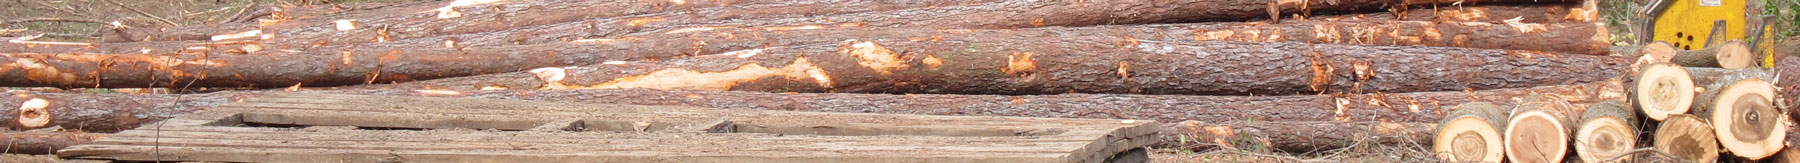 photo of log harvest pile